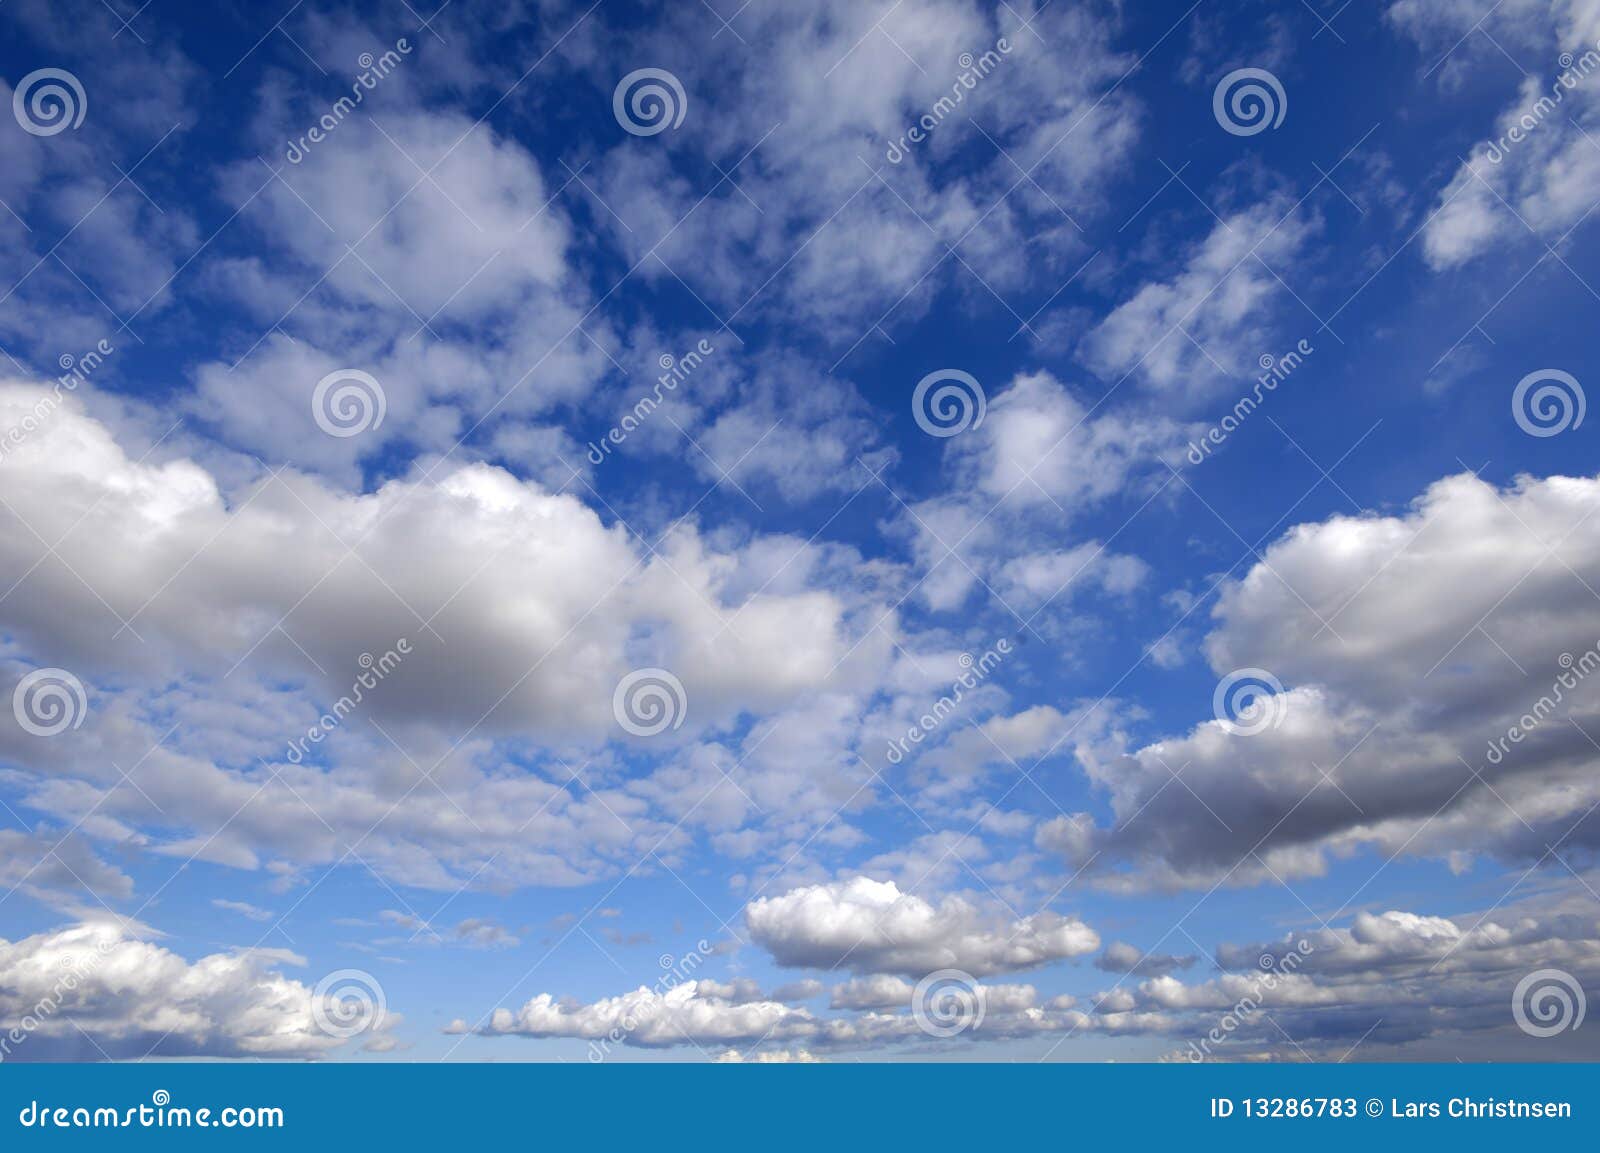 cloudscape and blue sky